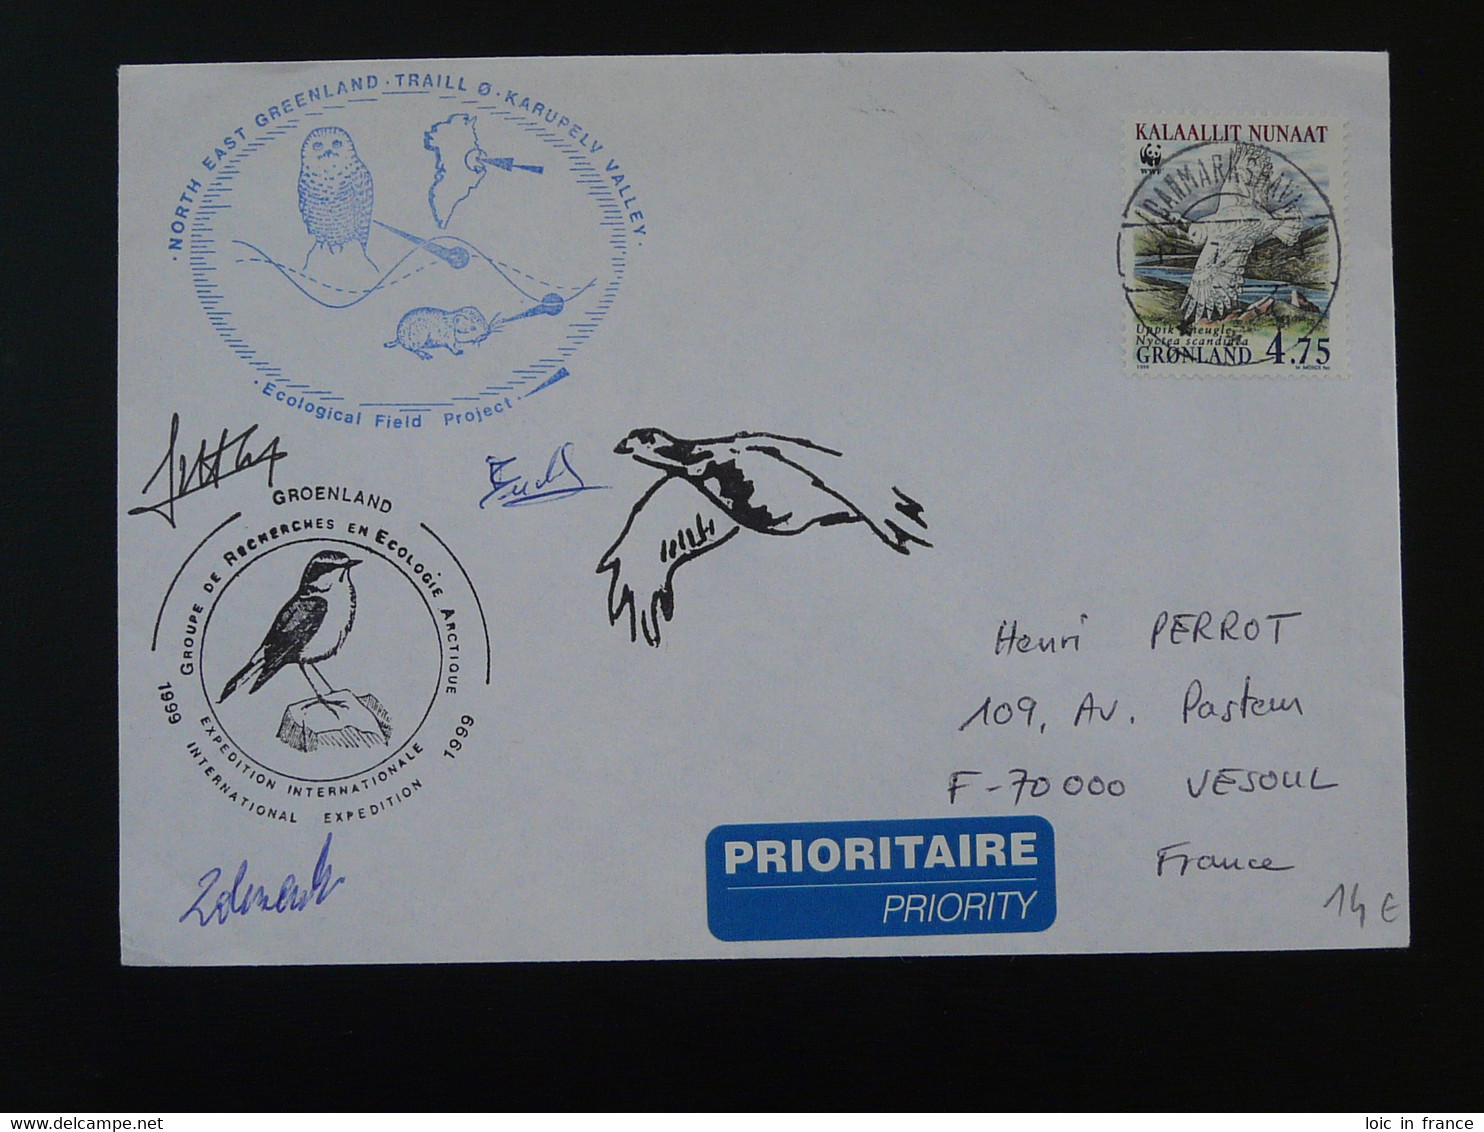 Lettre Signée Signed Cover Expédition Polaire écologie Arctique Oiseau Bird WWF Groenland Greenland 1999 - Fauna ártica